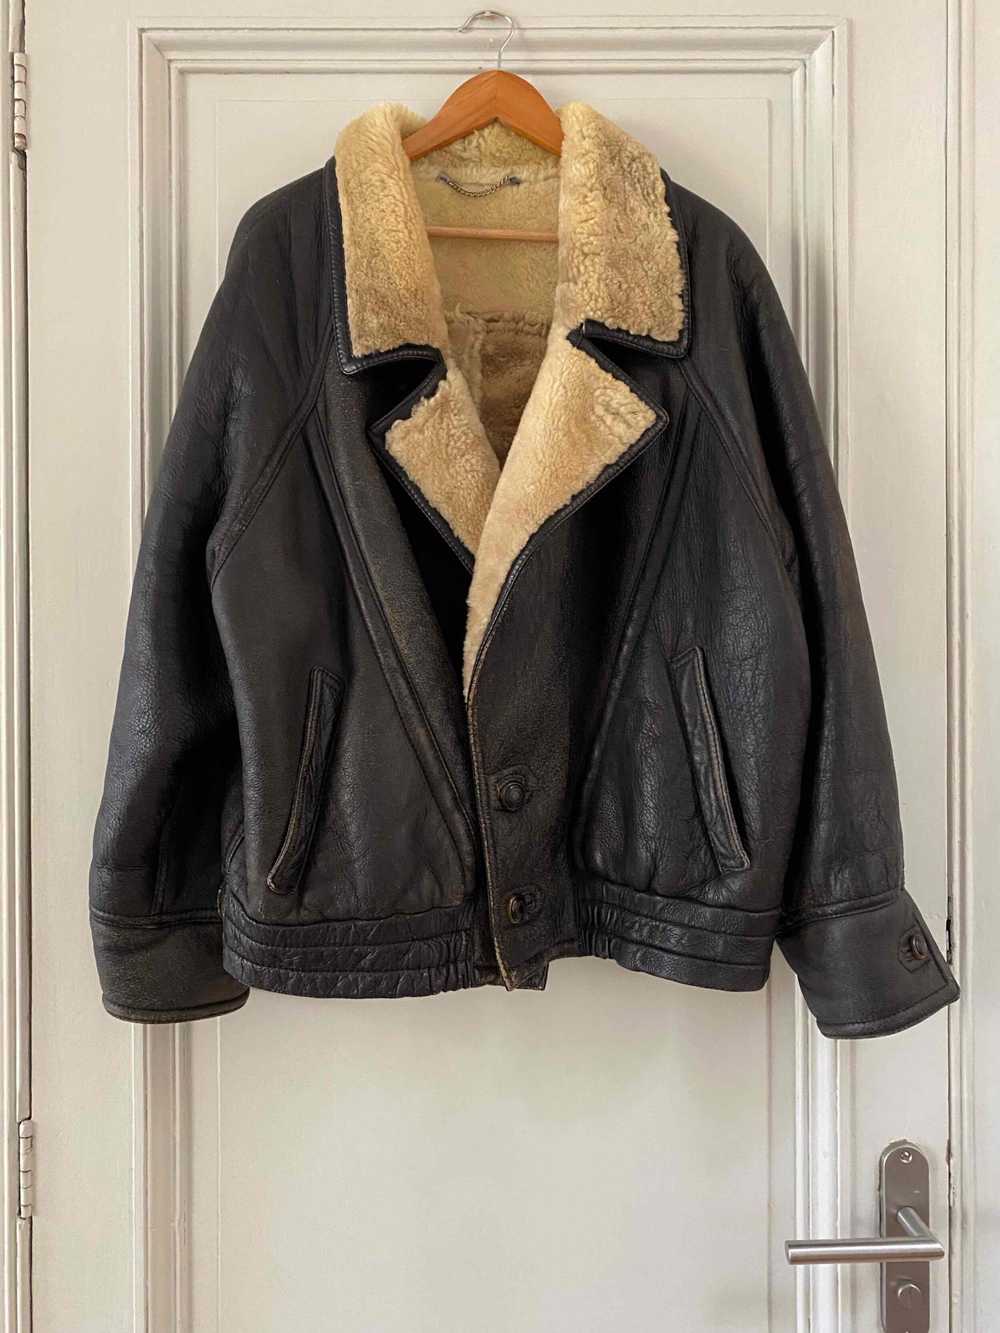 Shearling bomber - Shearling bomber jacket in she… - image 6